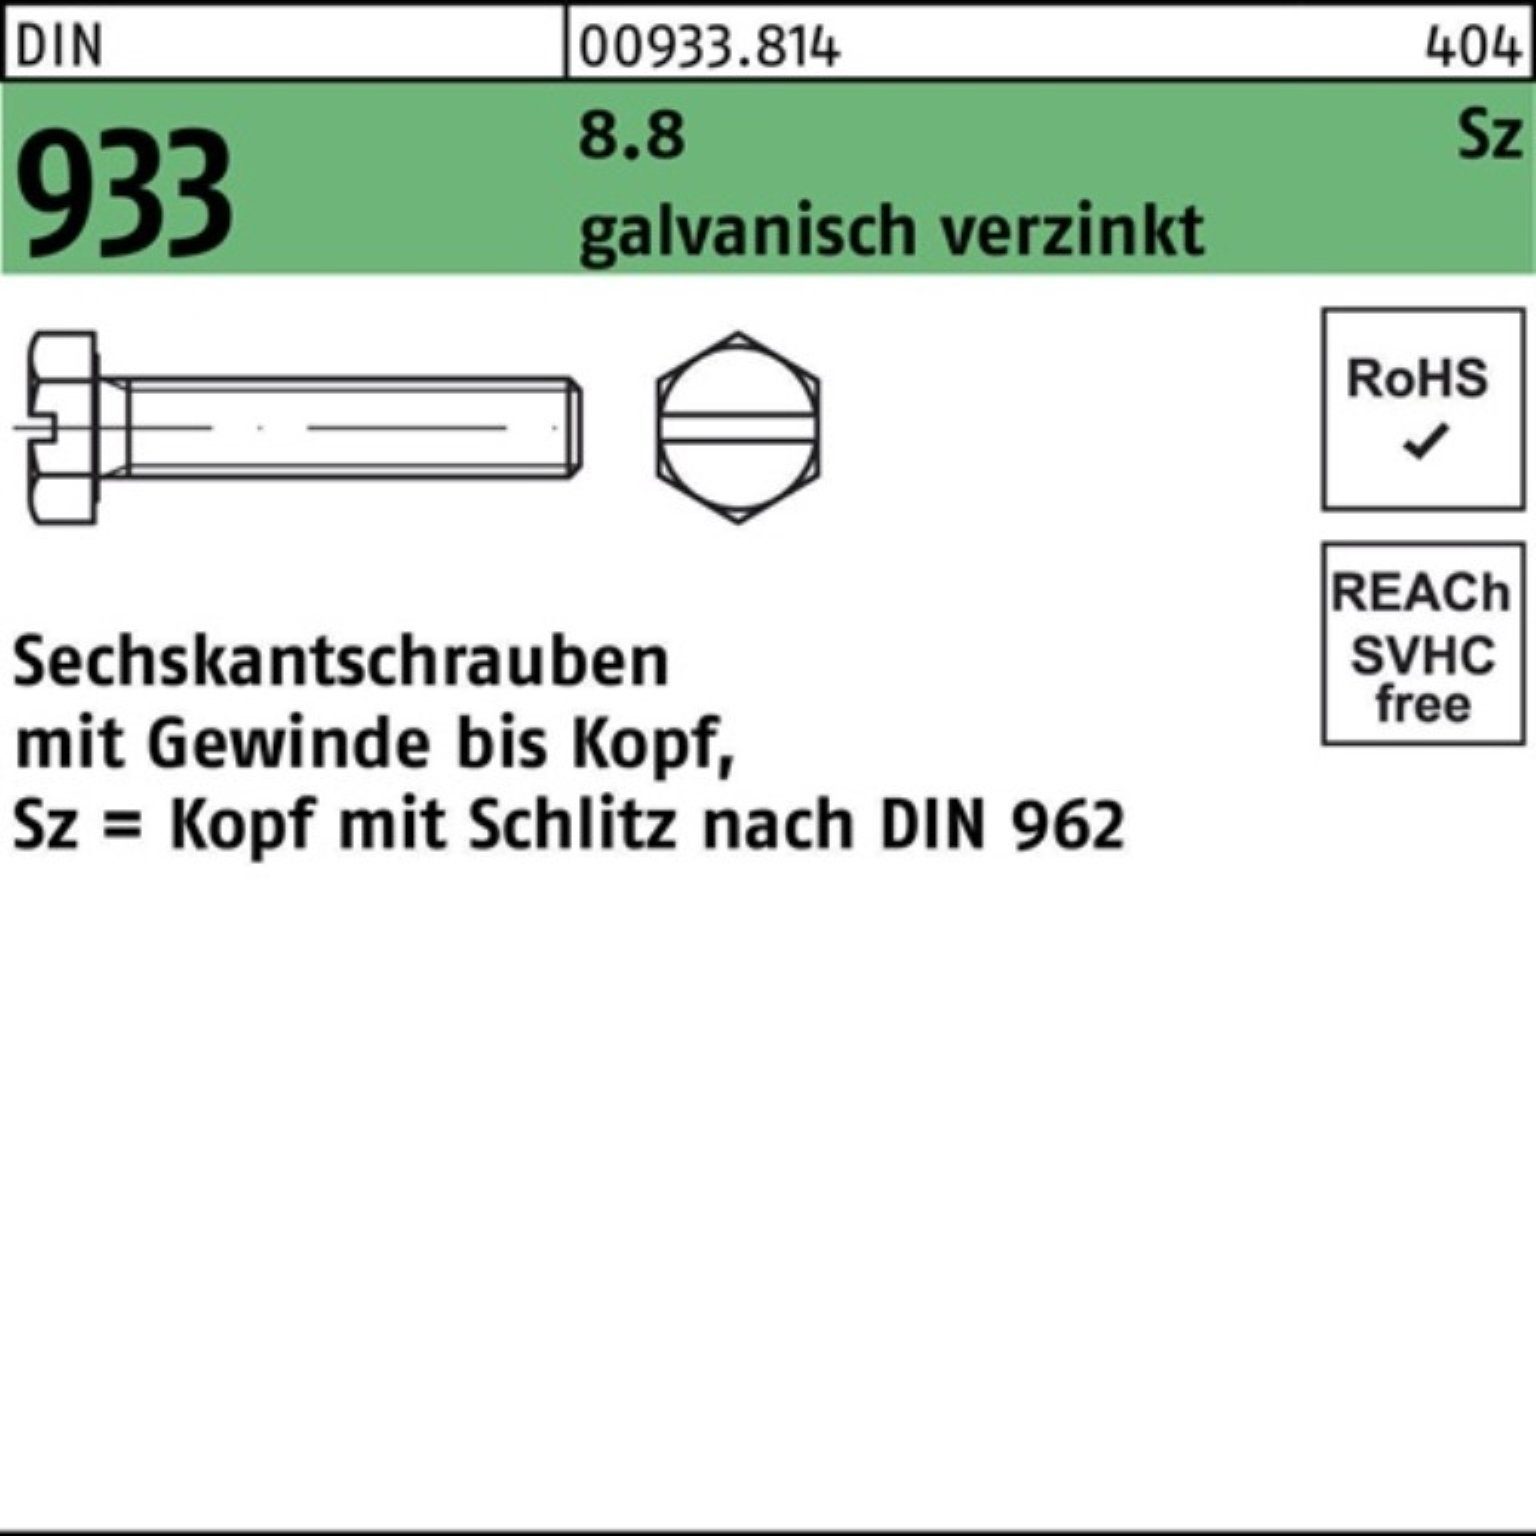 Reyher Sechskantschraube 500er 933 Sechskantschraube DIN M6x 30 VG/Schlitz 8.8 galv.verz. Pack